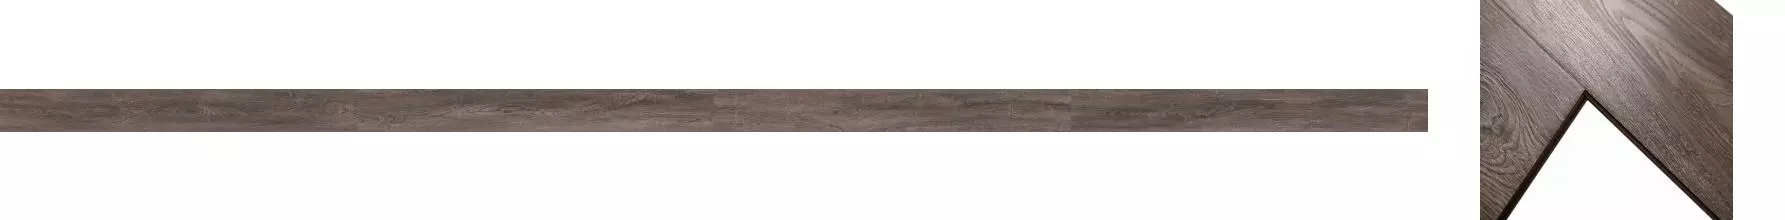 Ламинат «Wood Style»  Cottage Дорсет 121,7х14,5 C1008 33 класс тёмно-коричневый